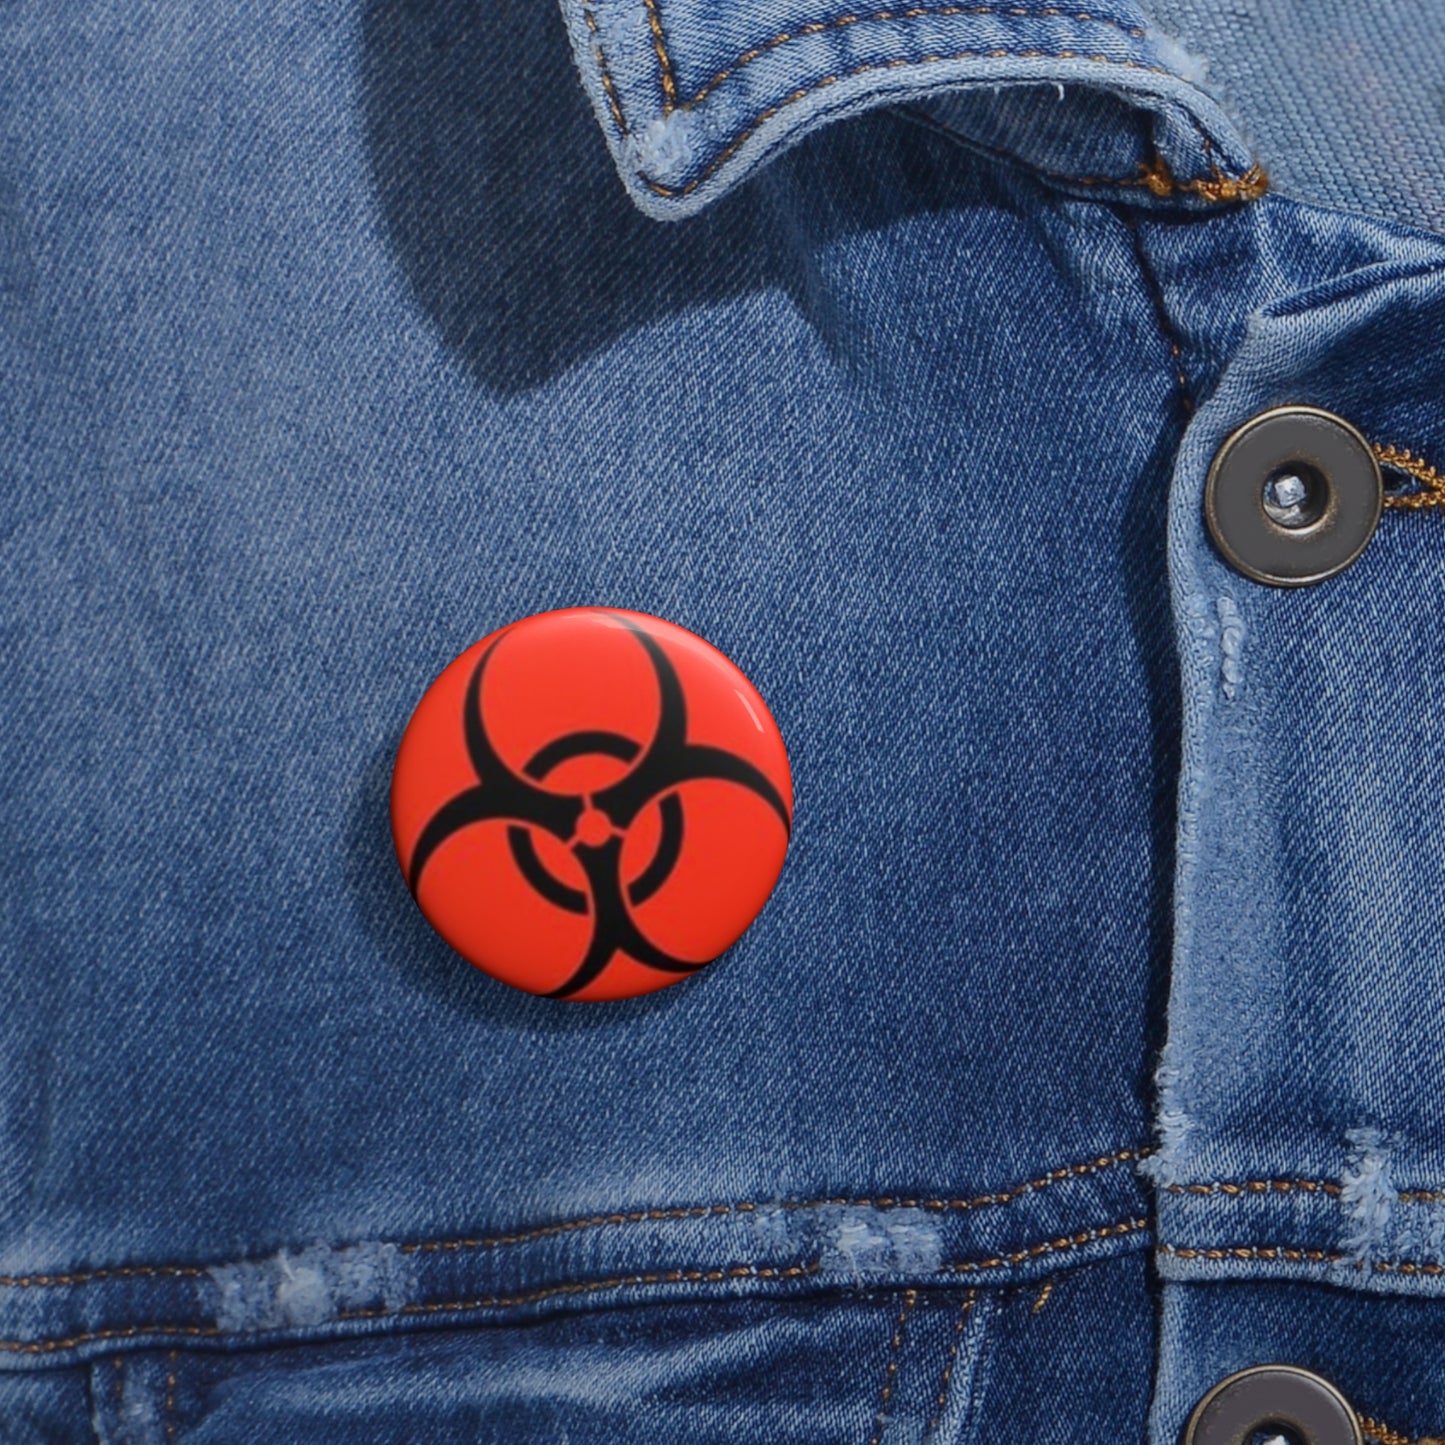 Biohazard Pattern - Custom Pin Buttons